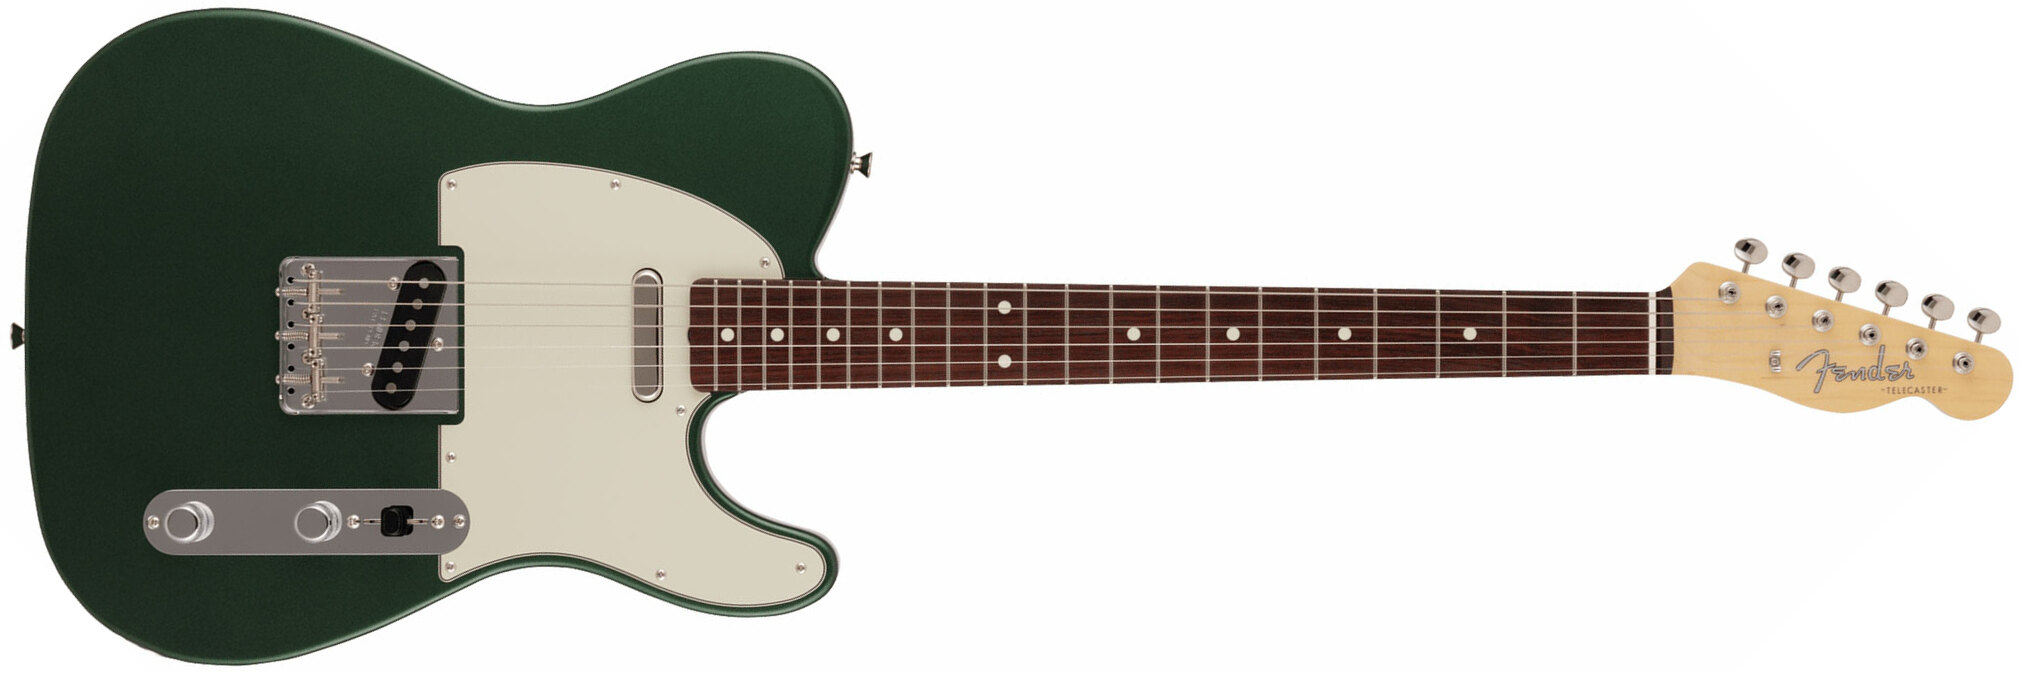 Fender Tele Traditional 60s Mij 2s Ht Rw - Aged Sherwood Green Metallic - Tel shape electric guitar - Main picture